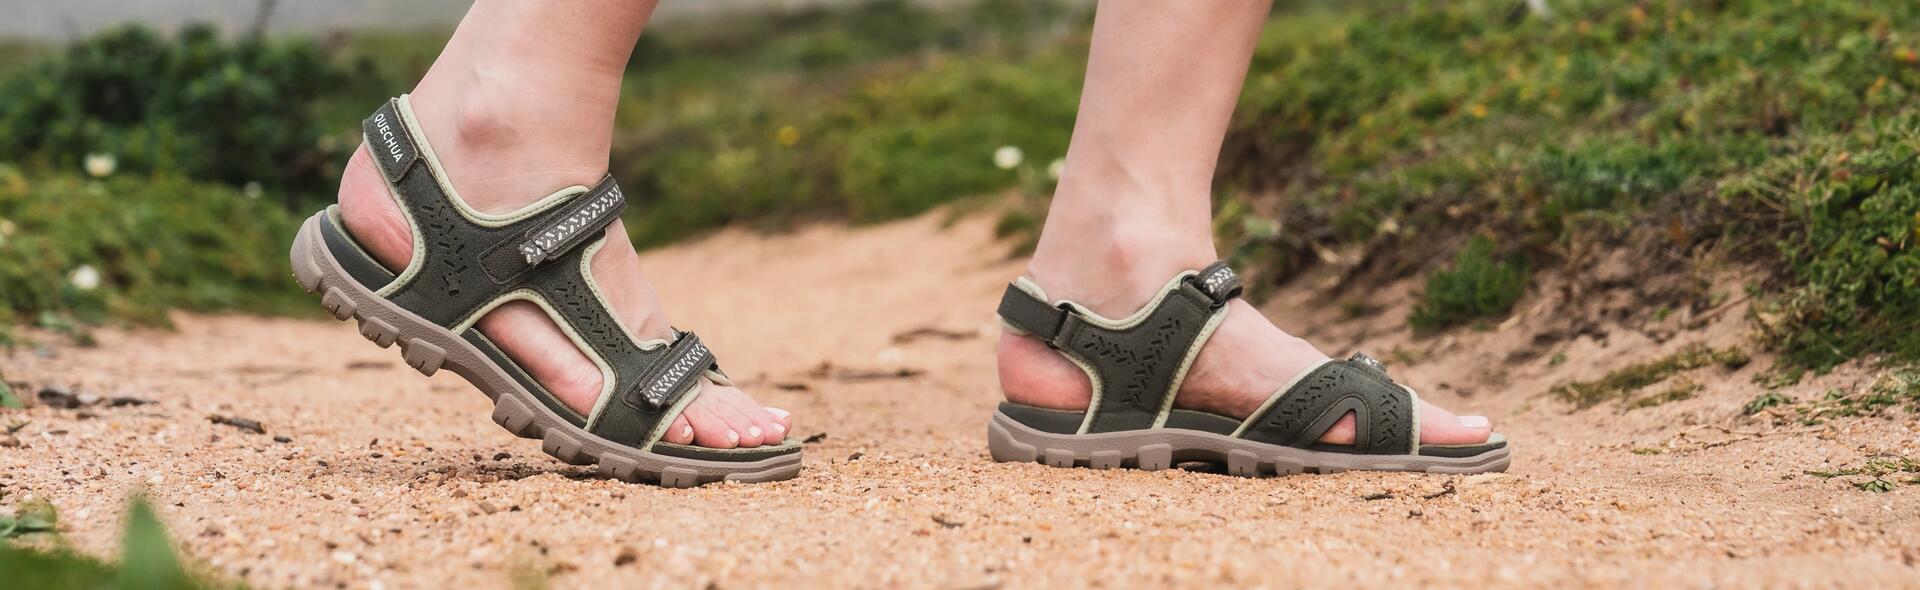 hiking-sandals-women